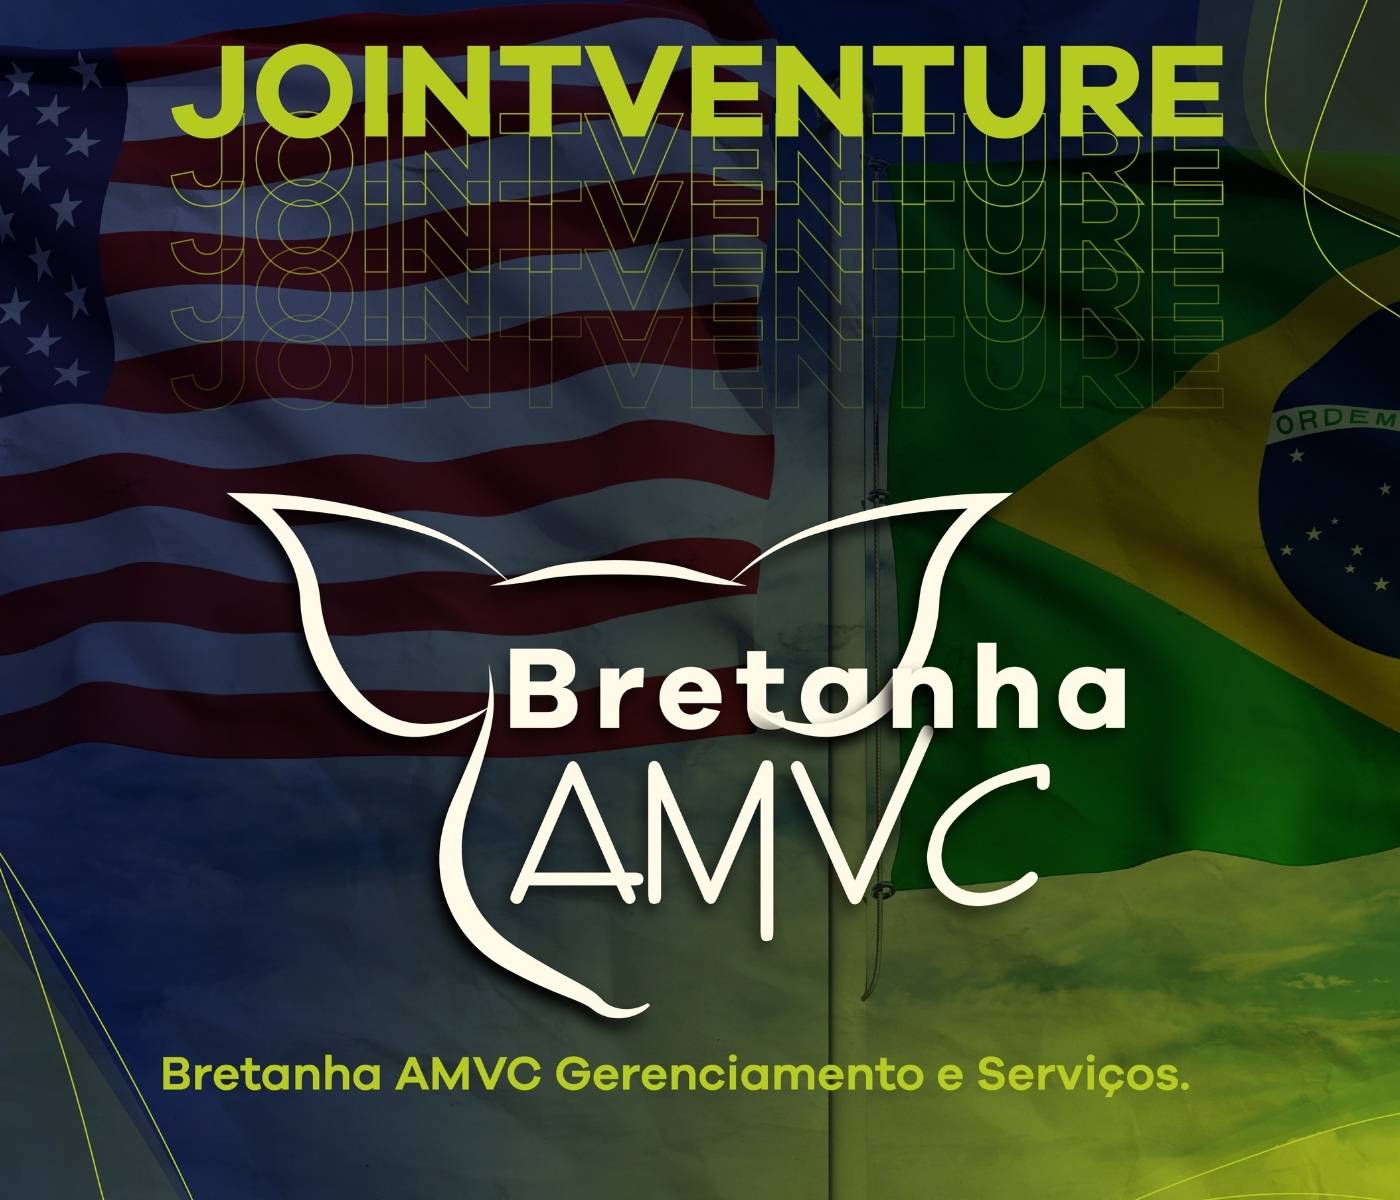 Bretanha e AMVC anunciam joint venture no Brasil